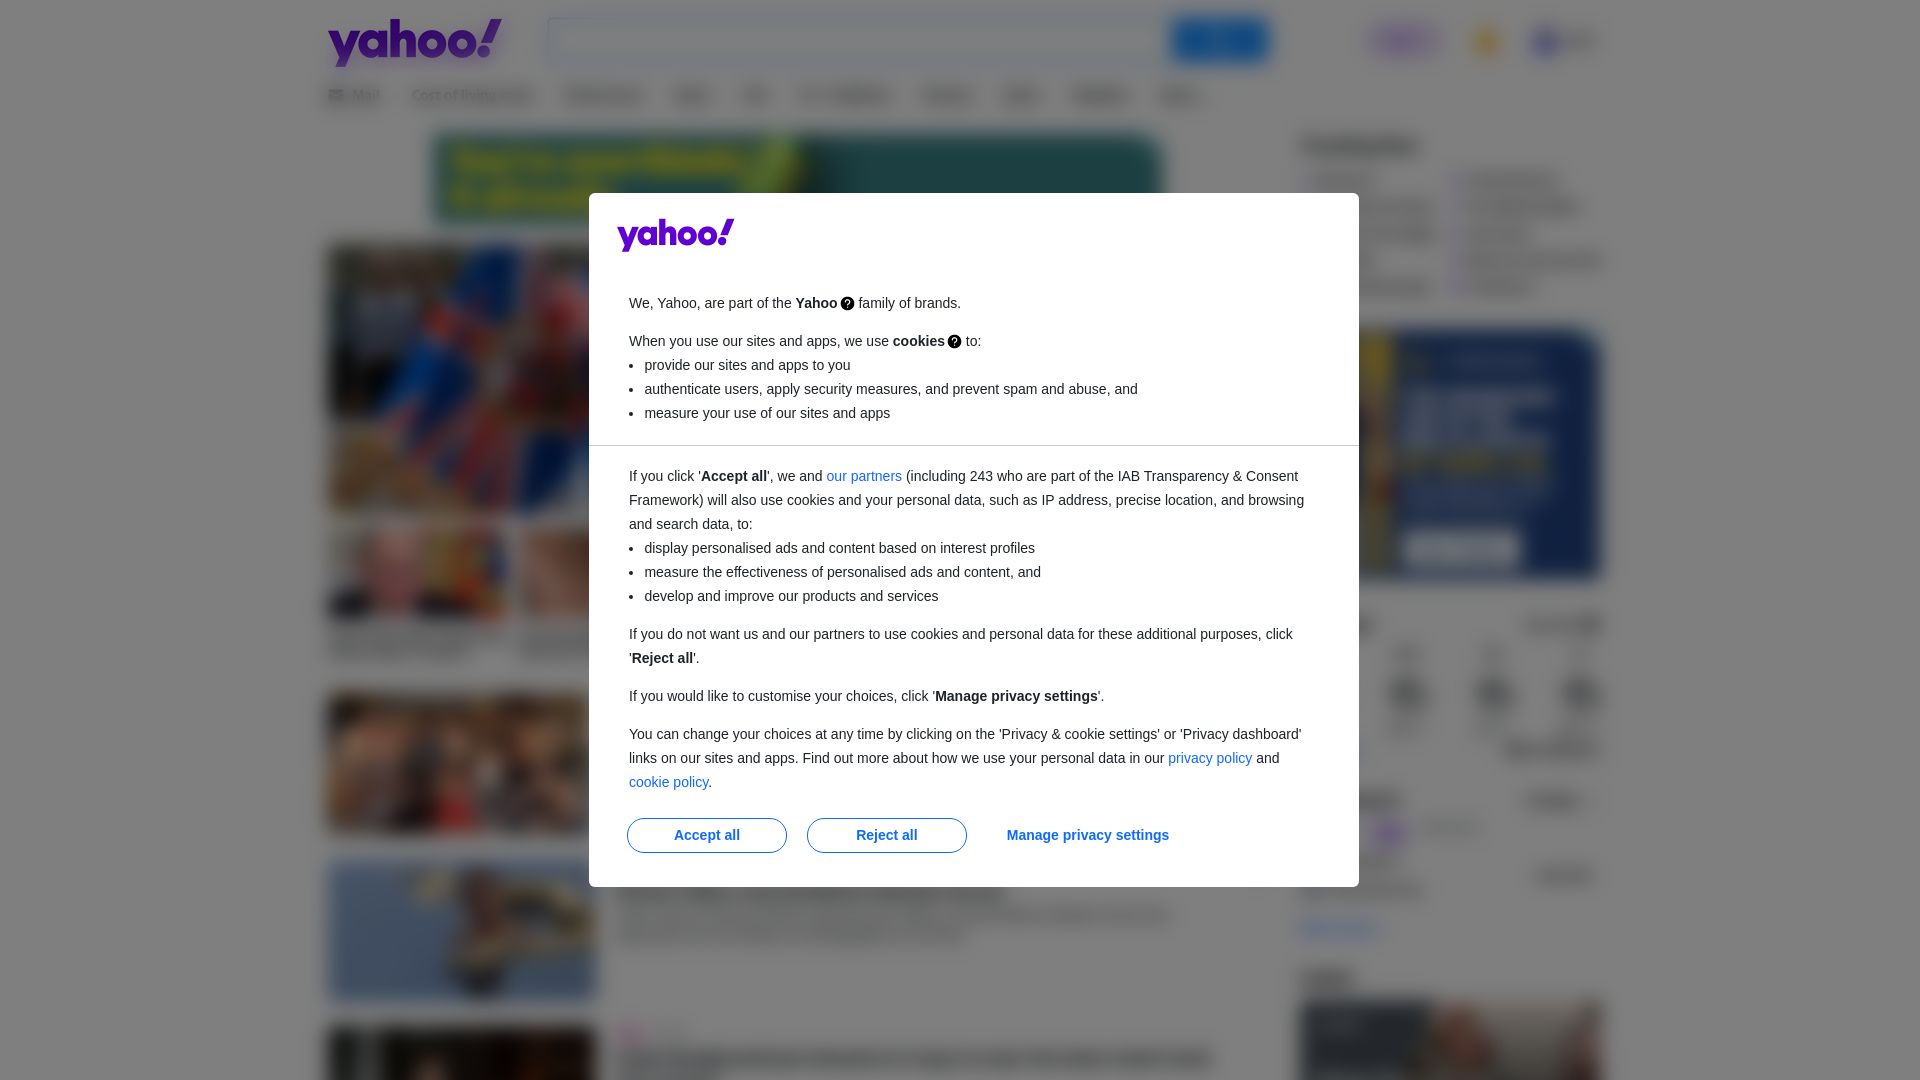 Status do site yahoo.ie está   ONLINE